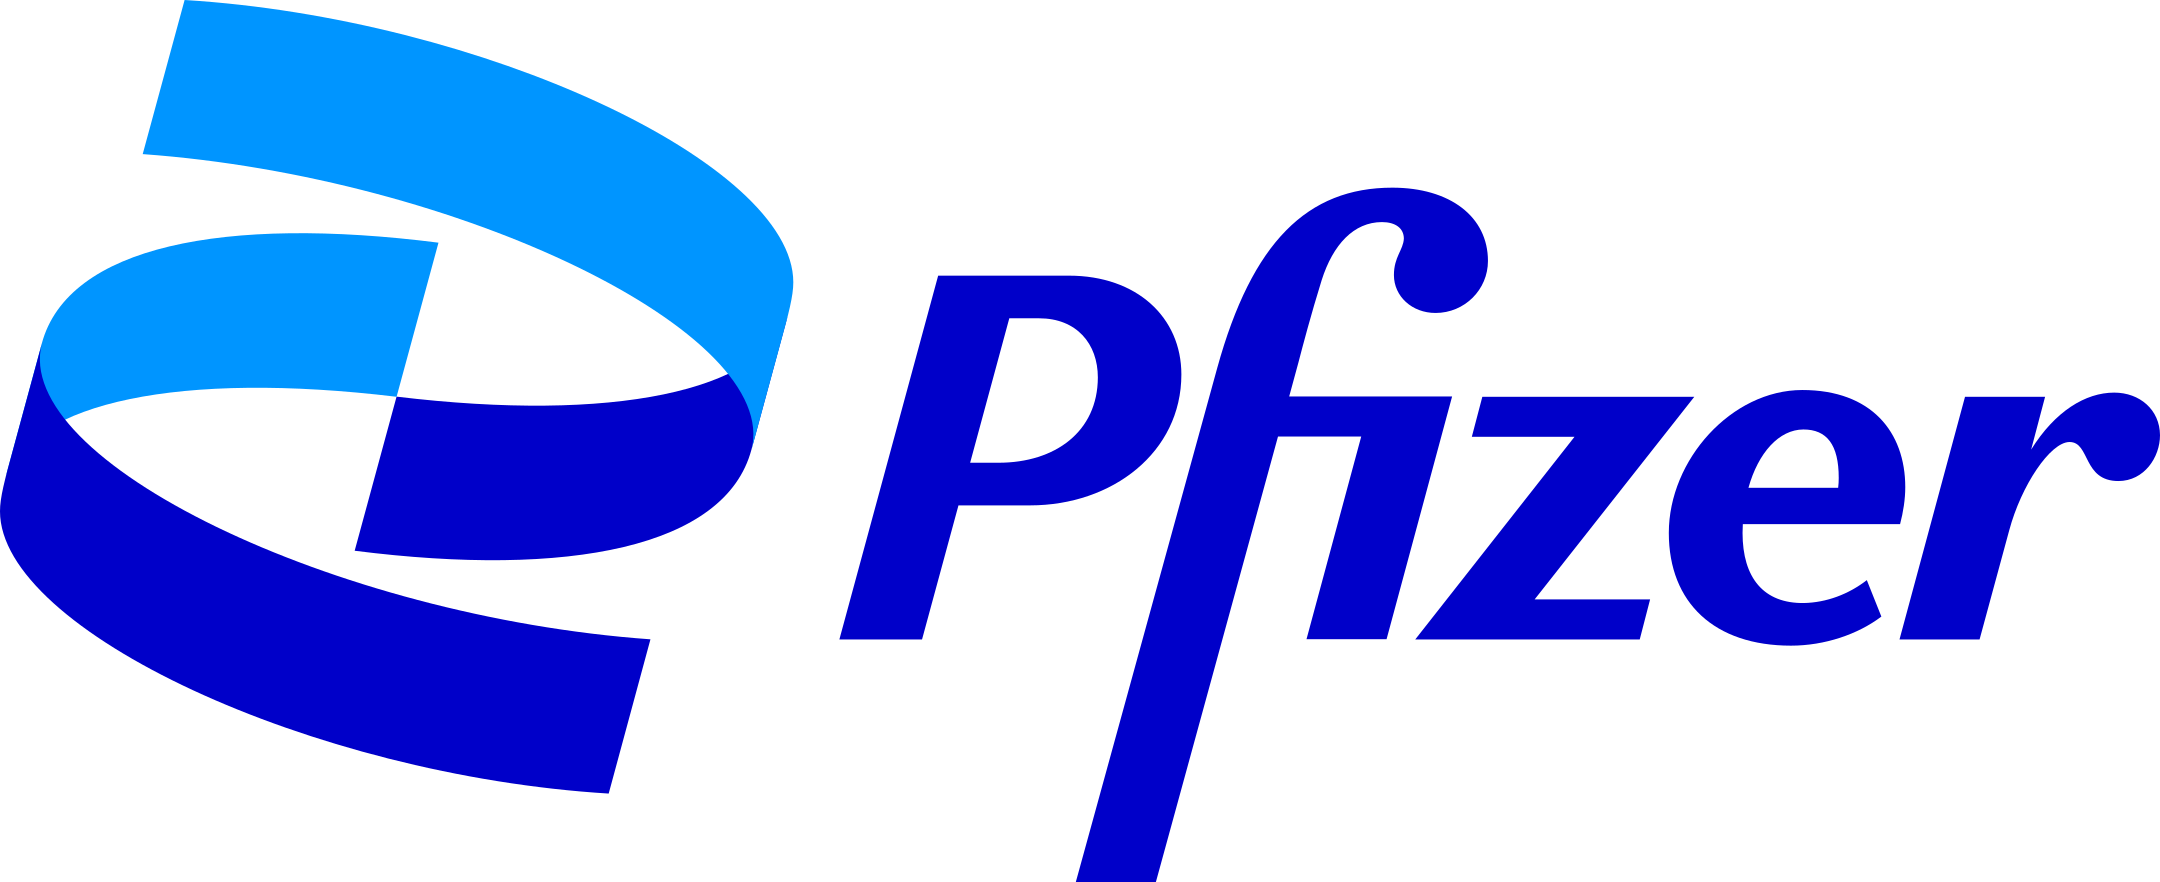 pfizer logo 1 1 - Pfizer Logo